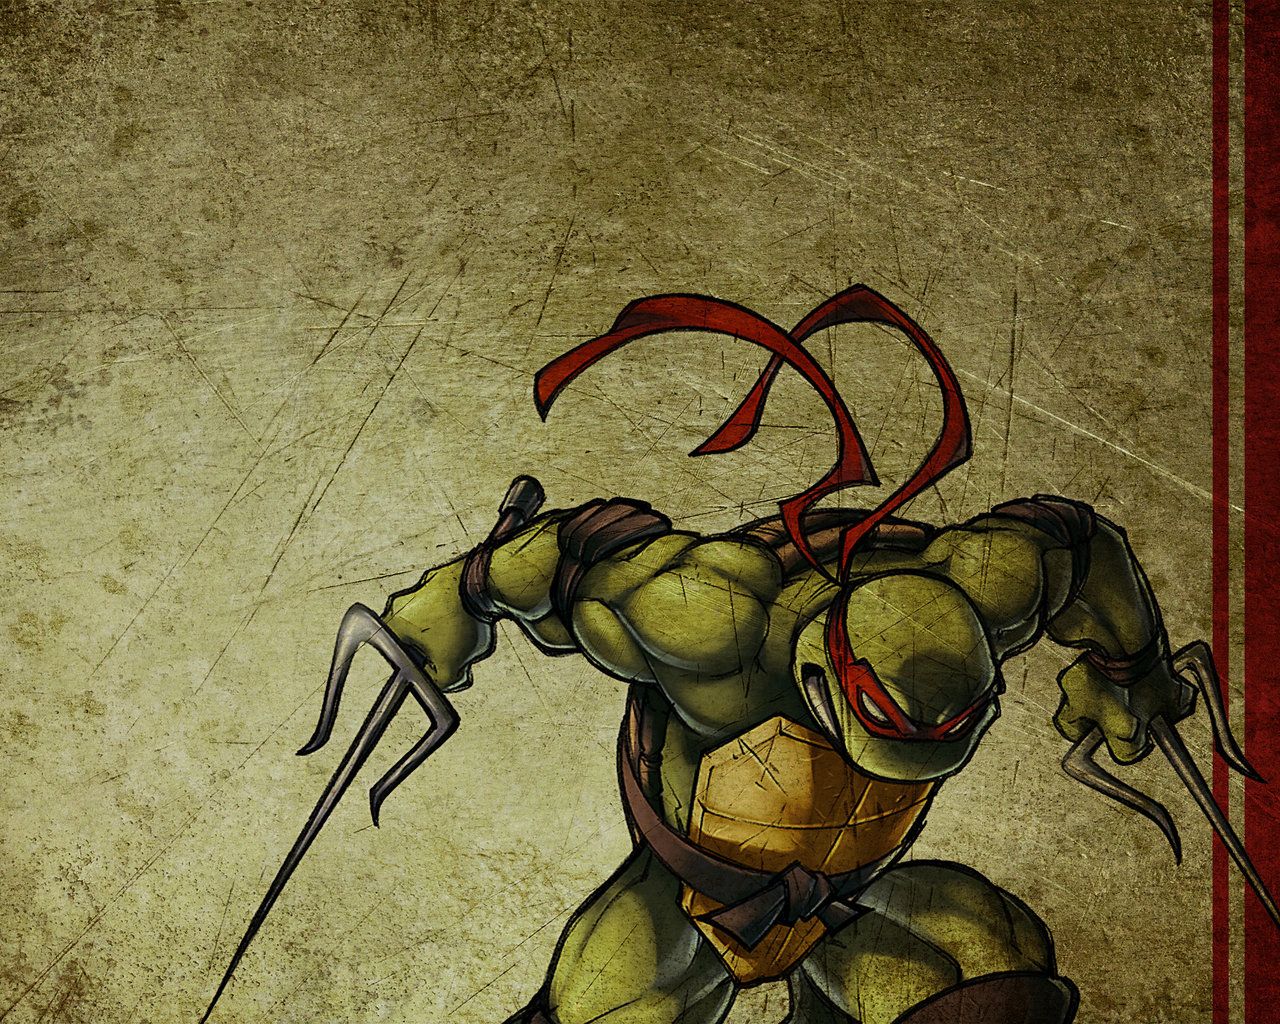 Desktop Wallpaper Teenage Mutant Ninja Turtles Cartoons